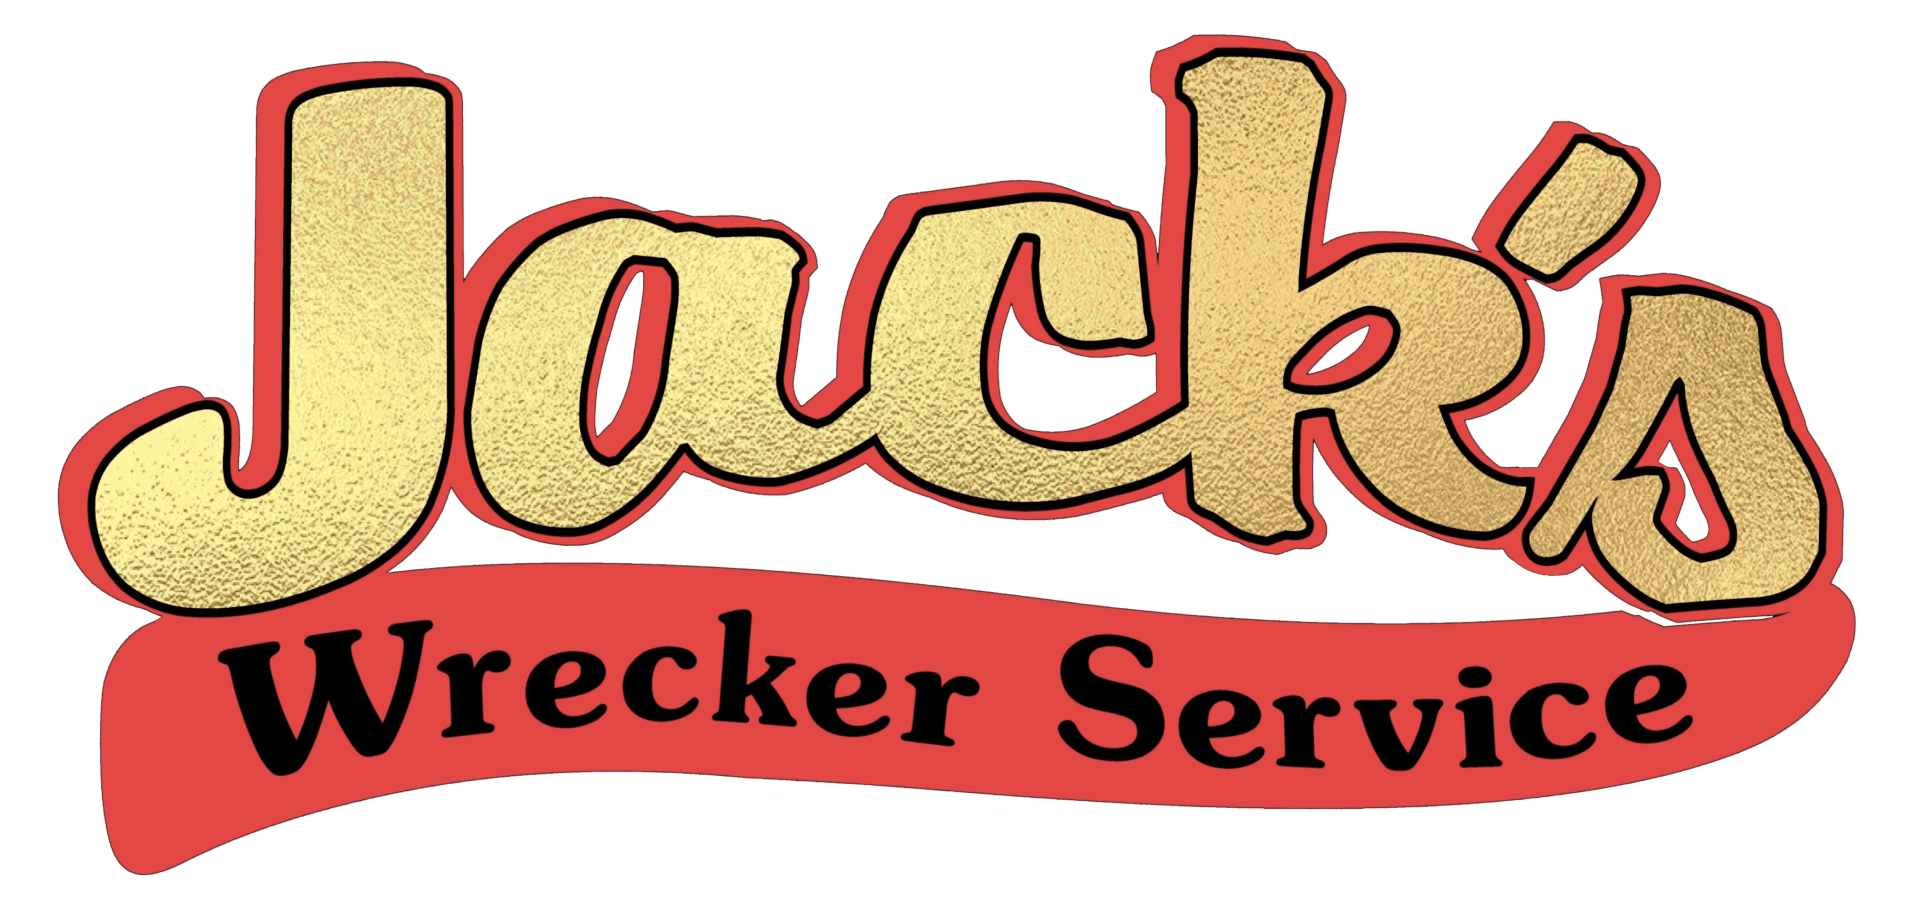 Jack's Wrecker Service